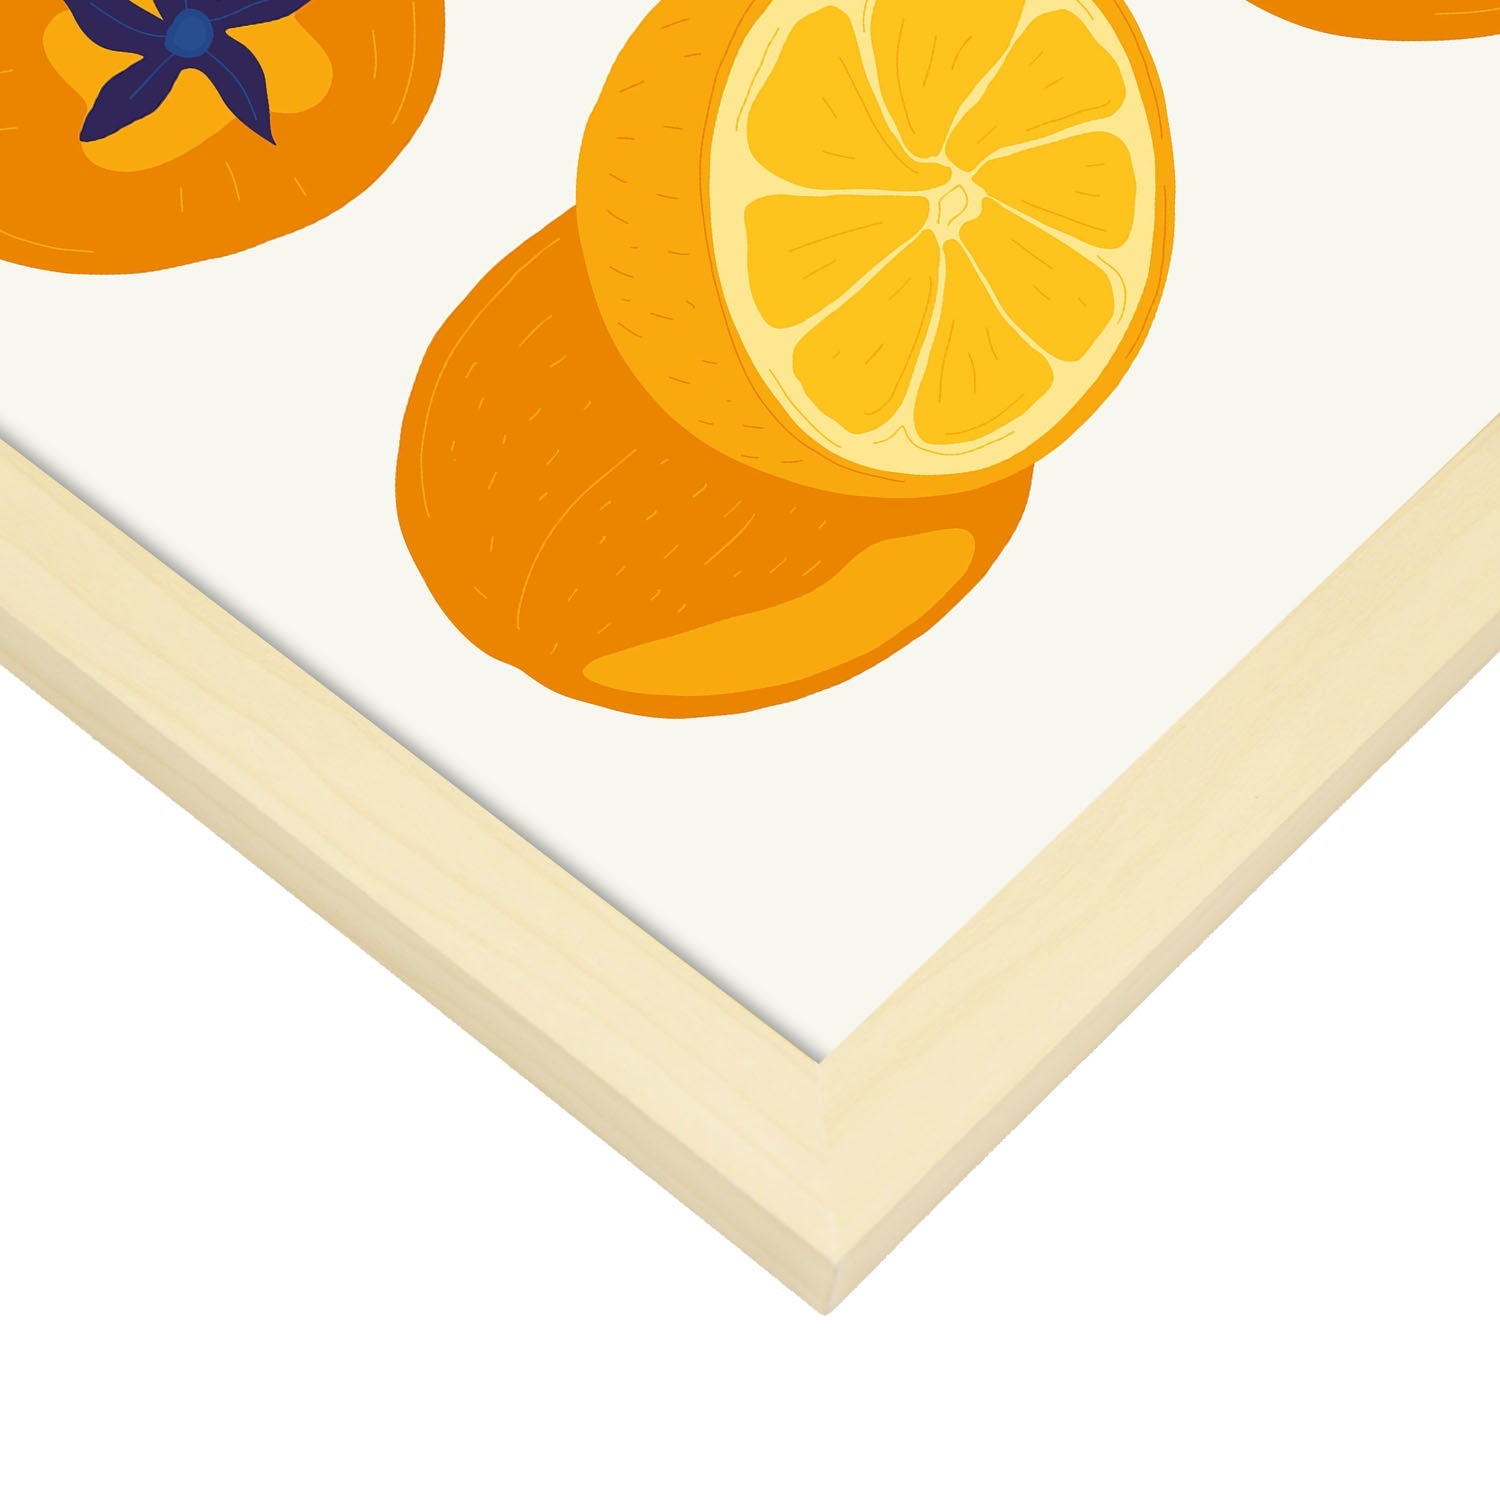 Orange Colored Fruits-Artwork-Nacnic-Nacnic Estudio SL